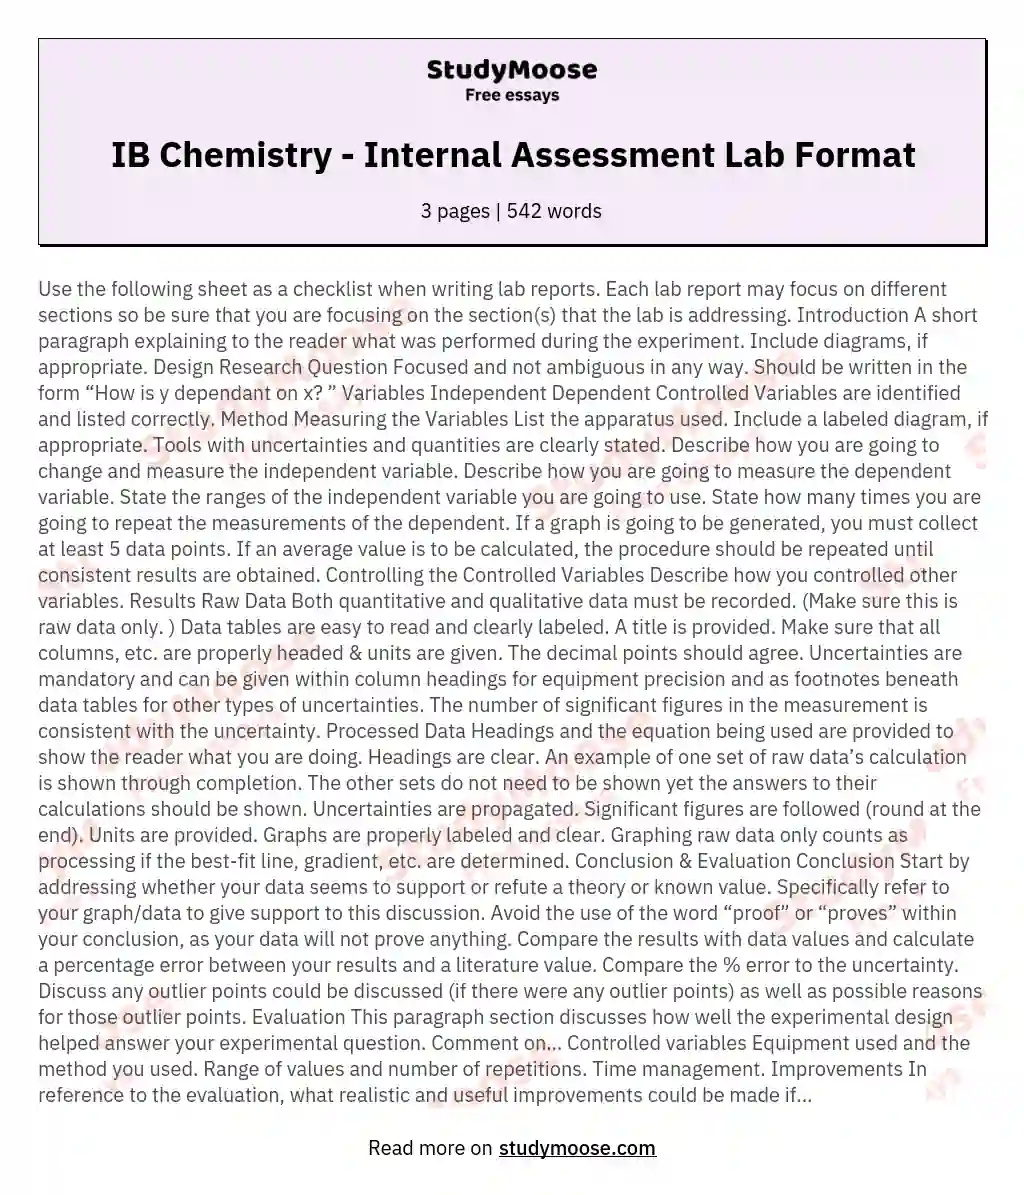 IB Chemistry - Internal Assessment Lab Format essay